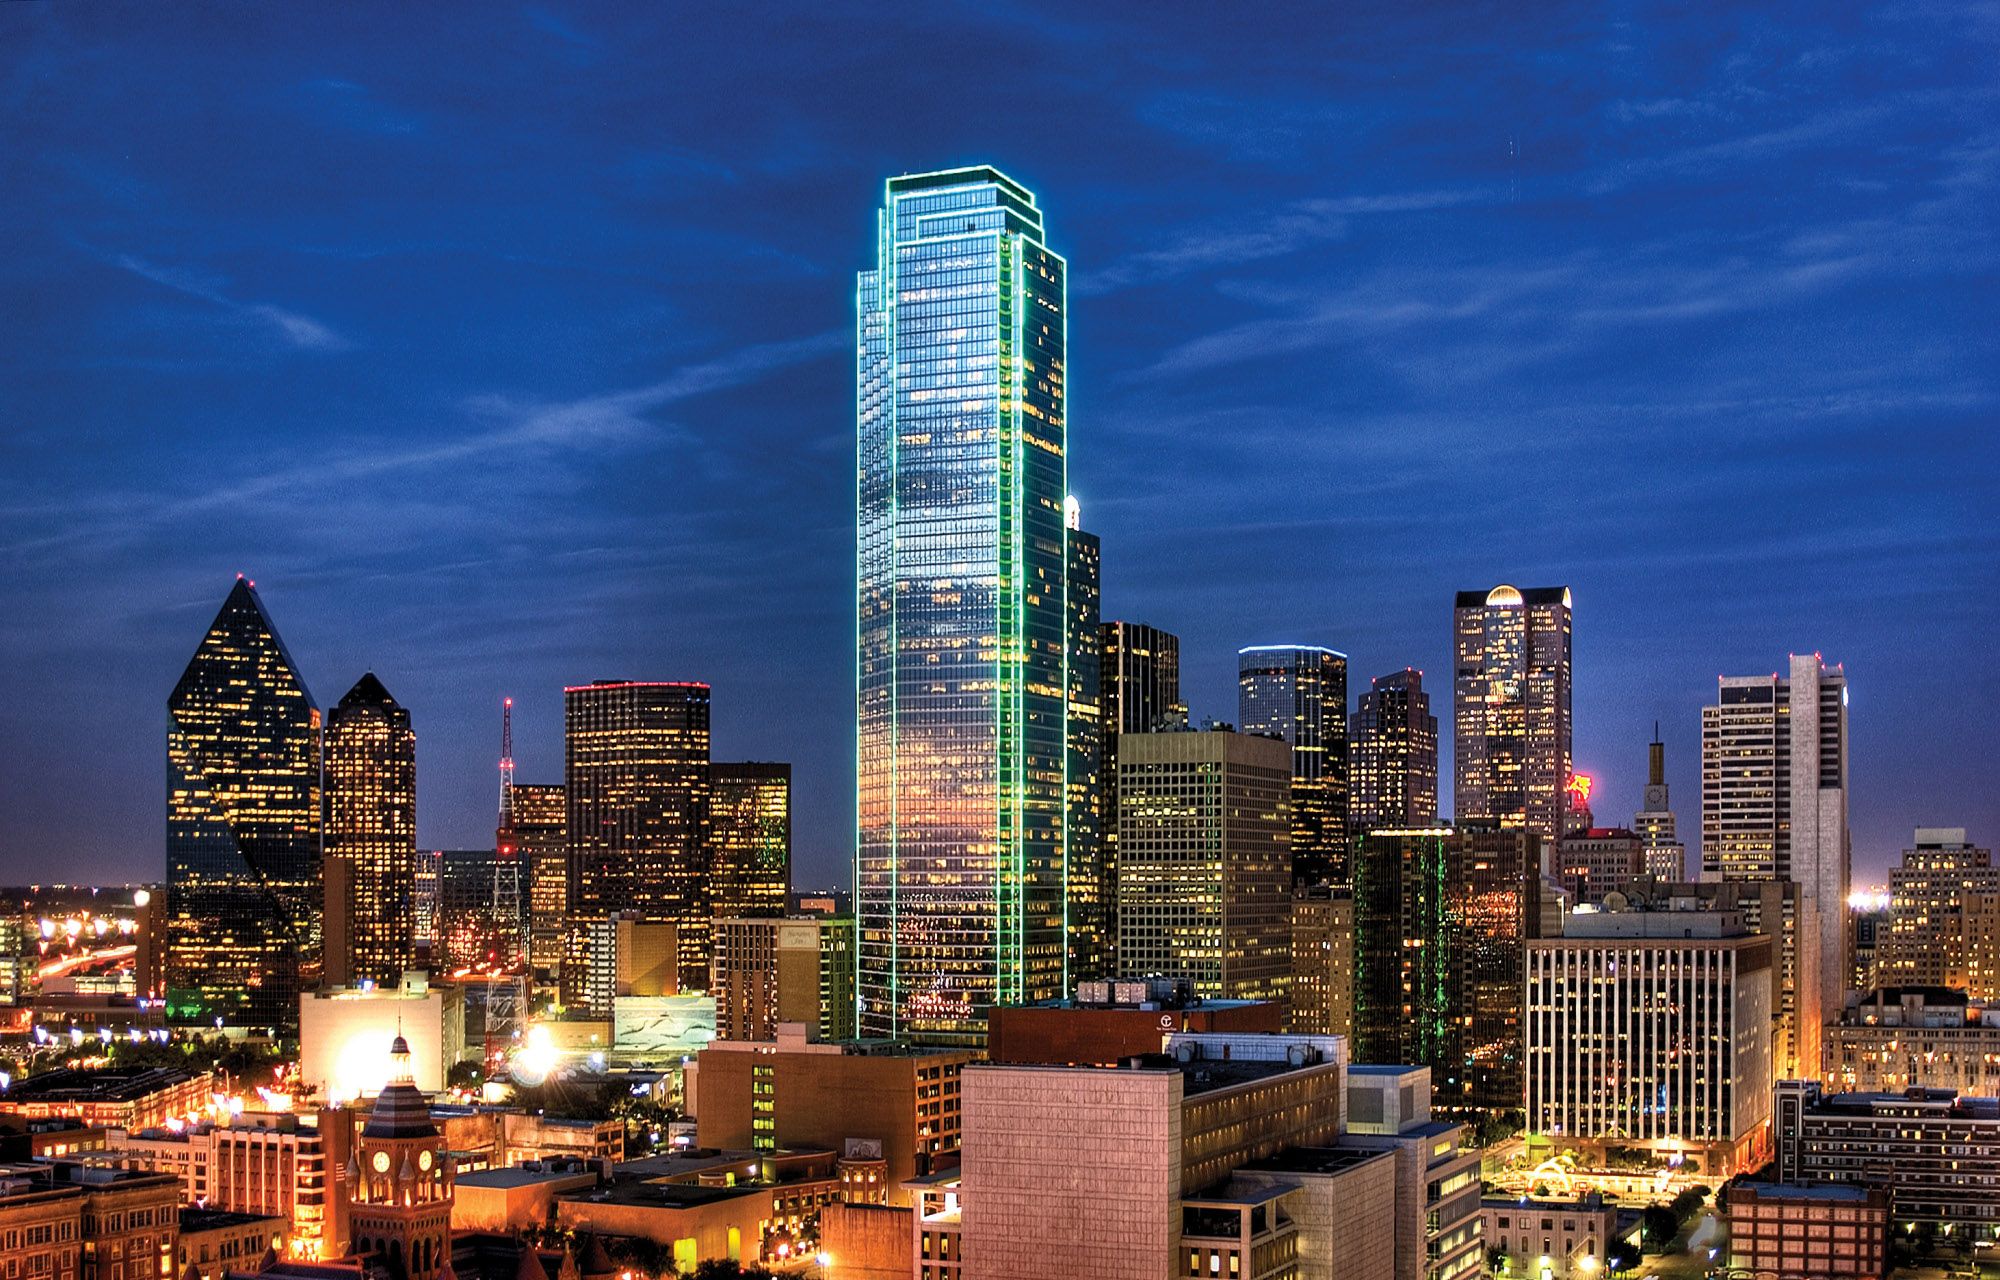 Dallas City | Dallas City Wallpapers | Pinterest | Dallas city, City ...